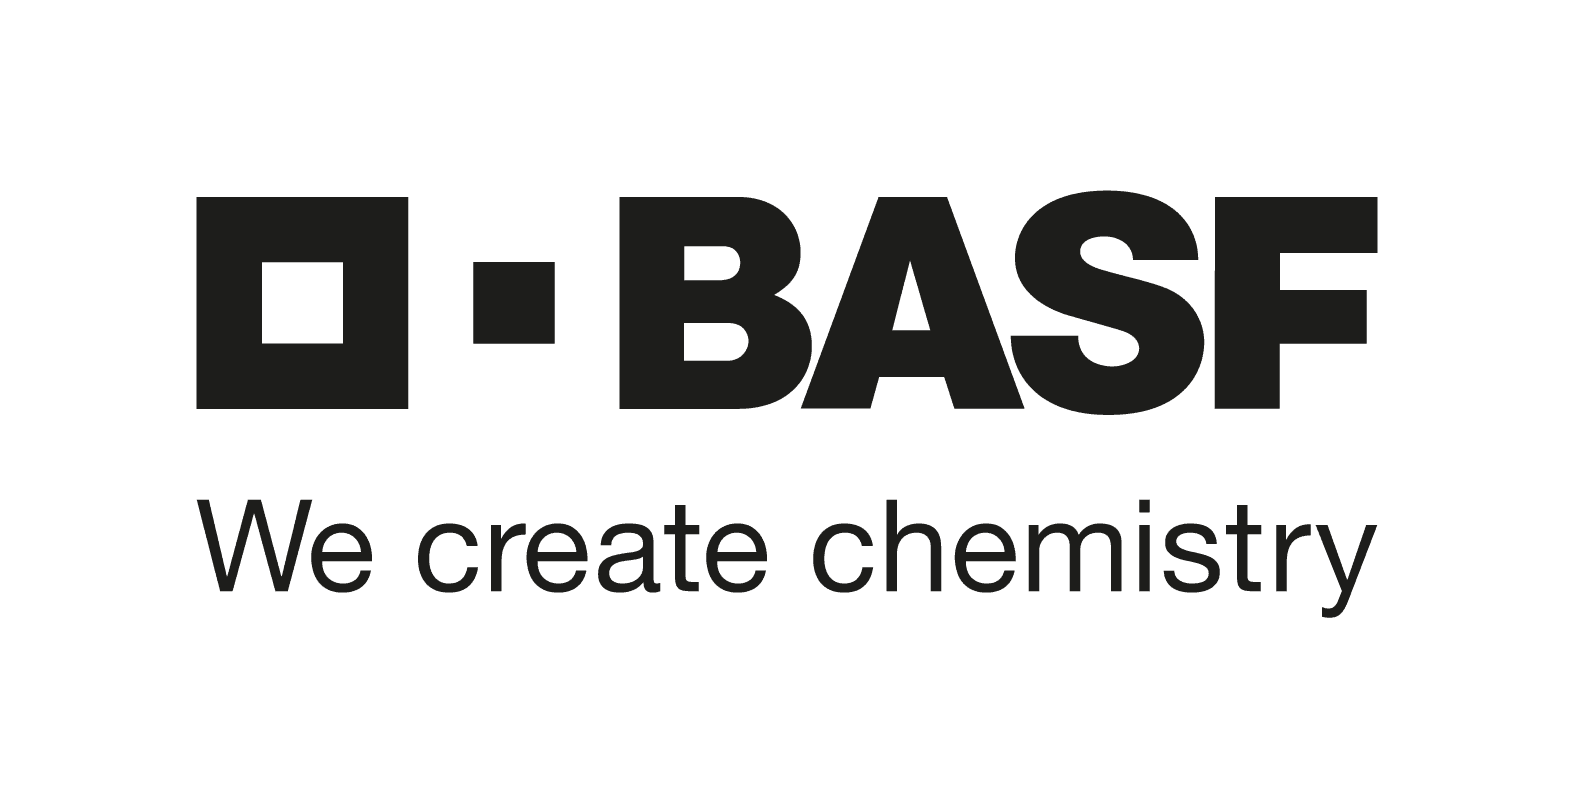 BASF Corporation